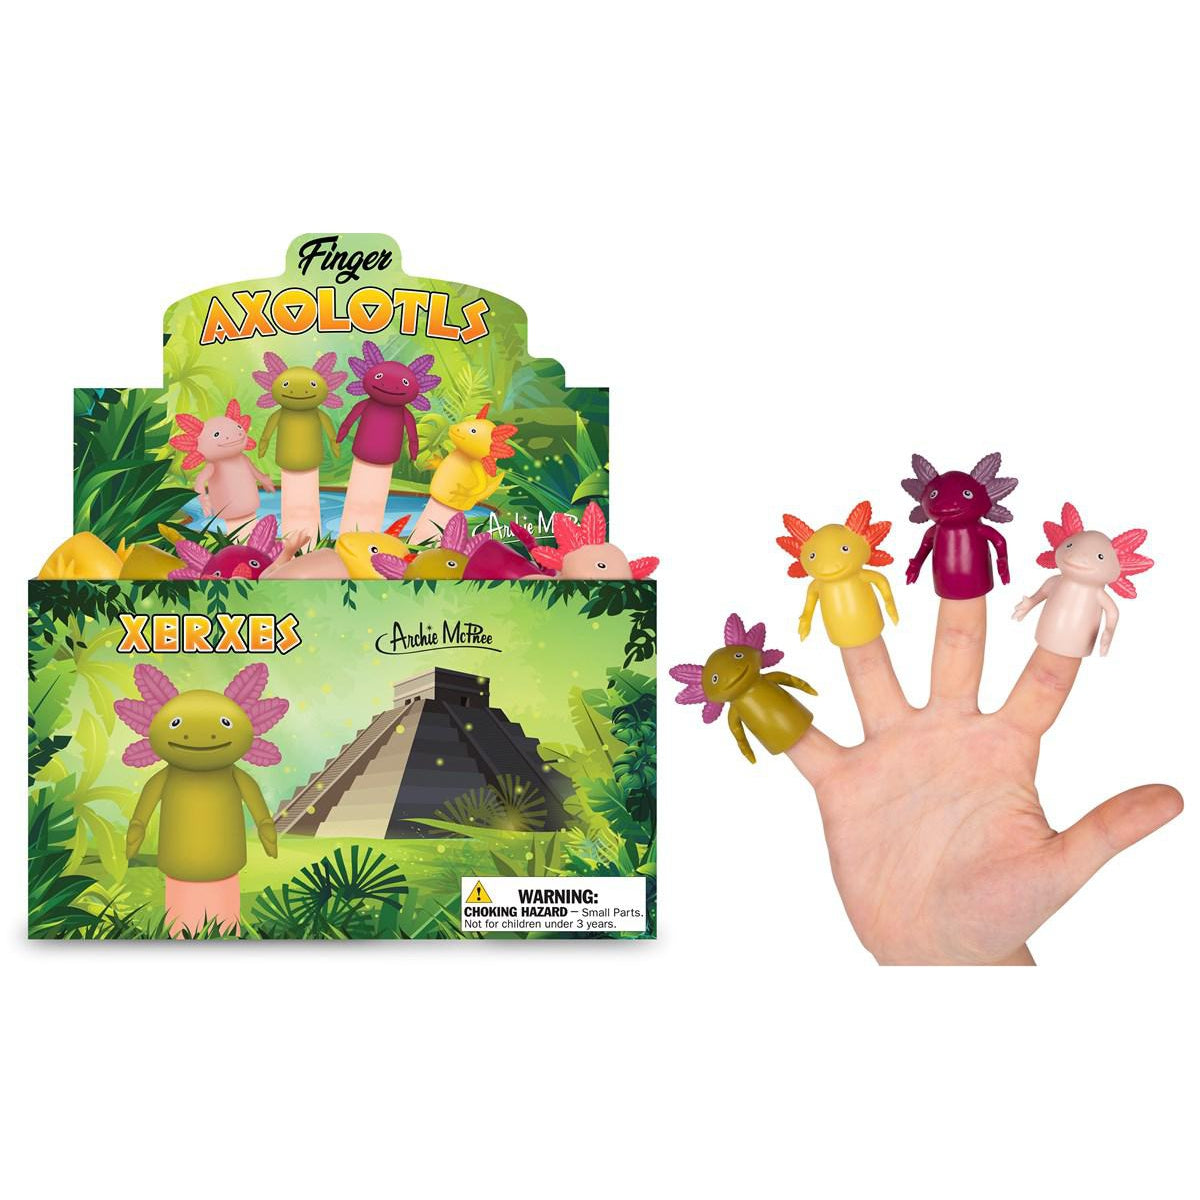 Finger Puppet - Finger Axolotl - Yellow Springs Toy Company